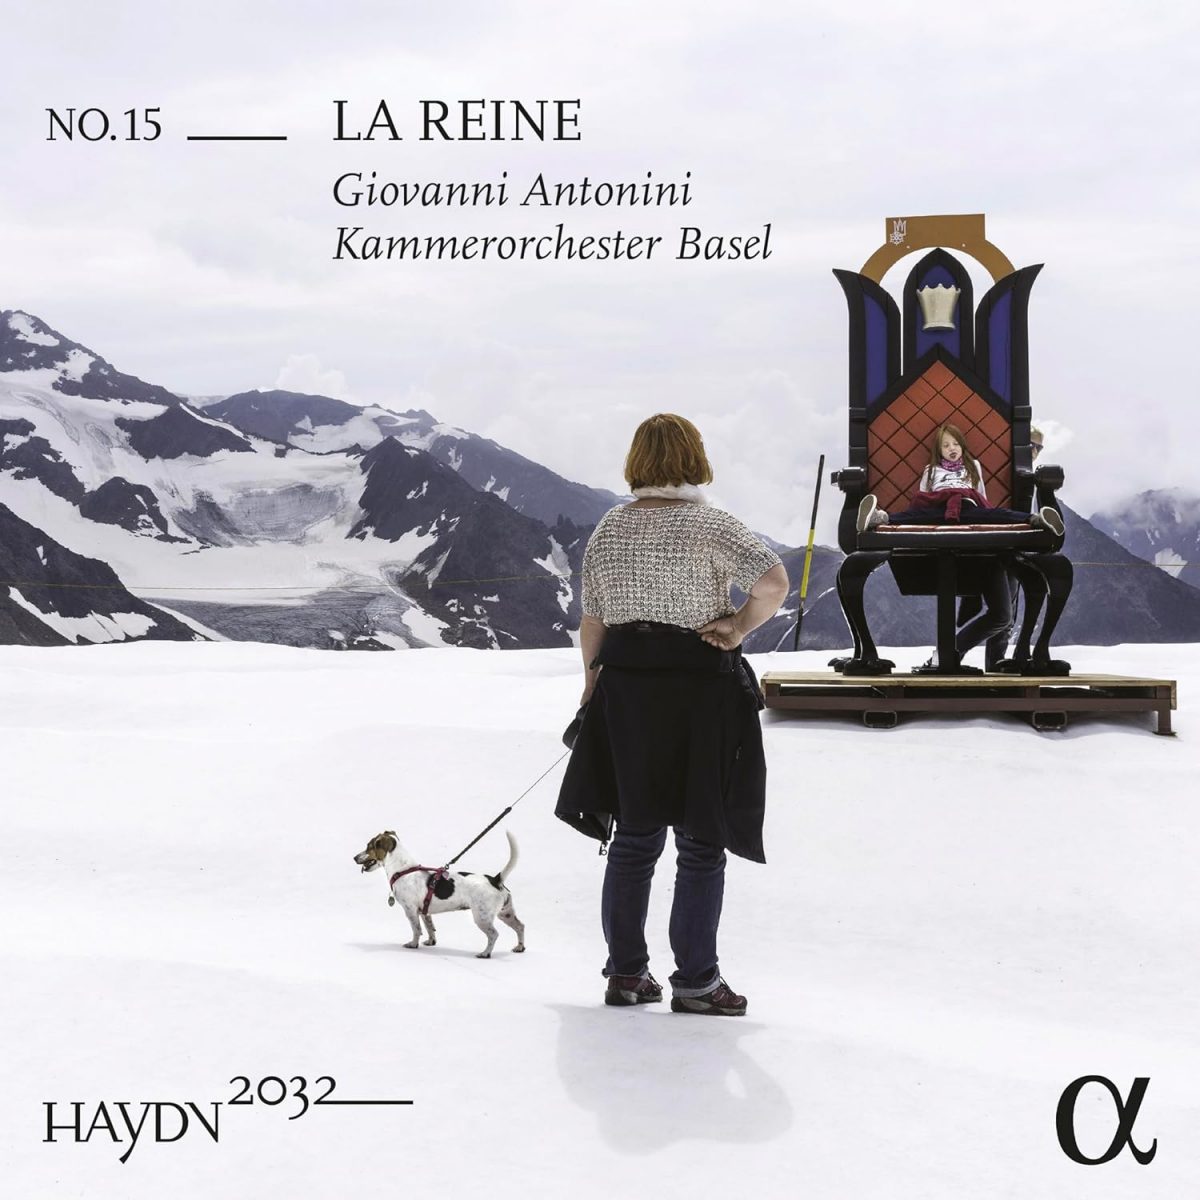 CD cover Haydn 2032 vol 15 La Reine